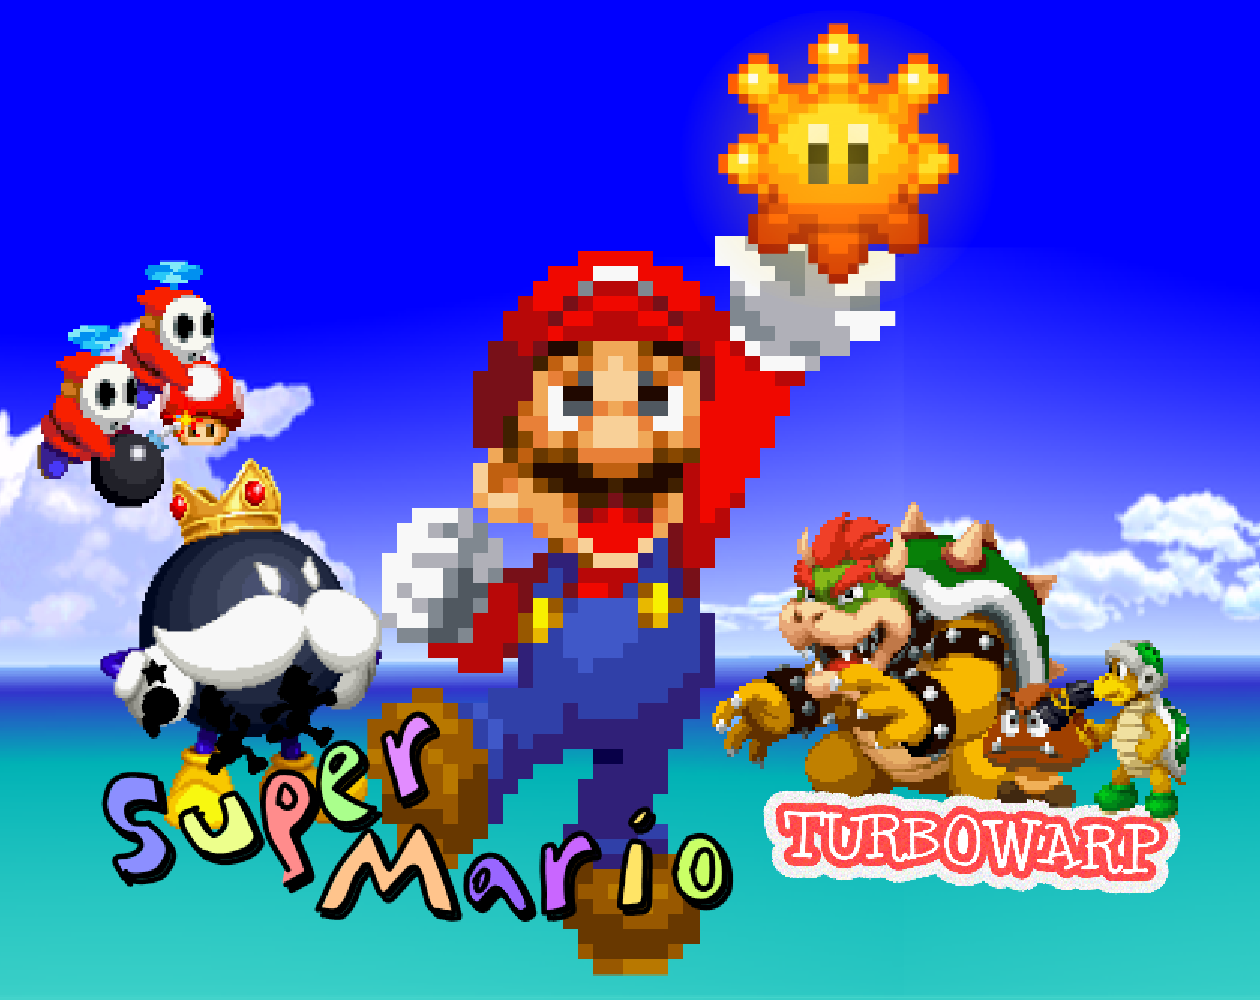 Getting Over It v2.14 Mario Version - TurboWarp